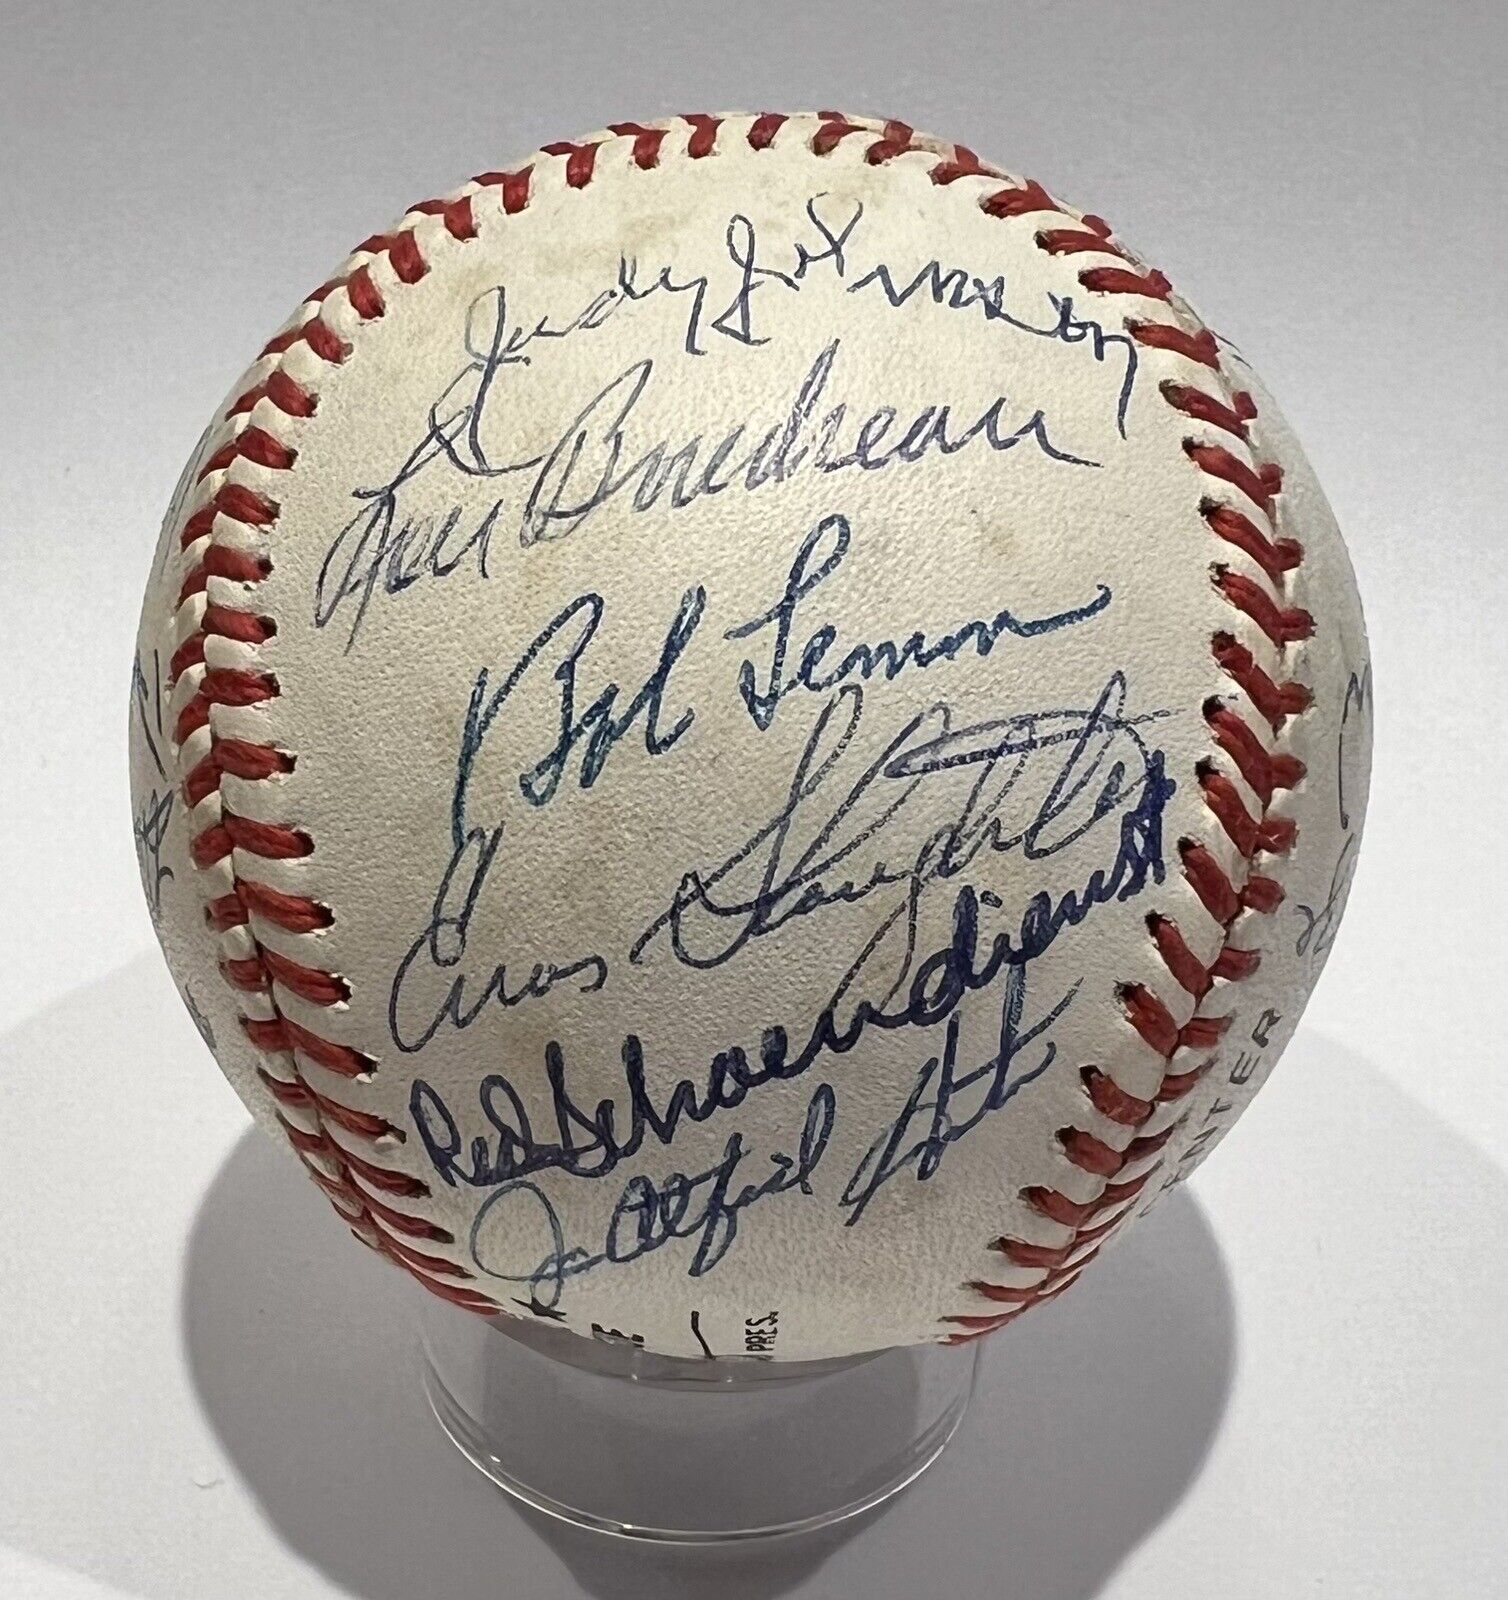 Ted Williams Hank Aaron Judy Johnson Hall of Fame Signed Baseball, 20 Autos. JSA